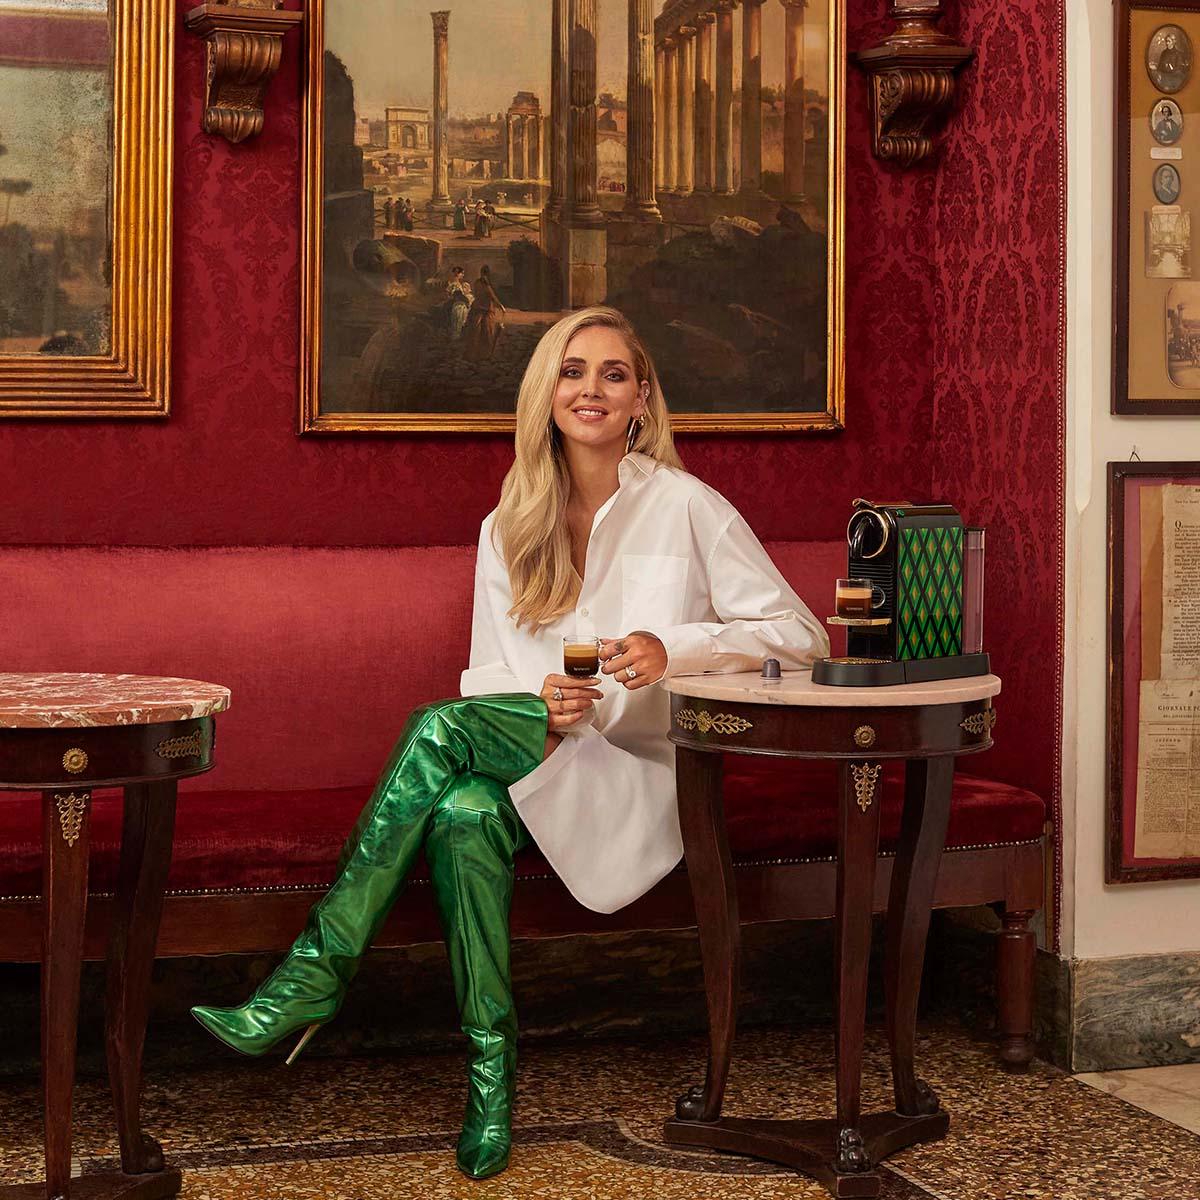 Dior on X: Join digital entrepreneur Chiara Ferragni as she takes